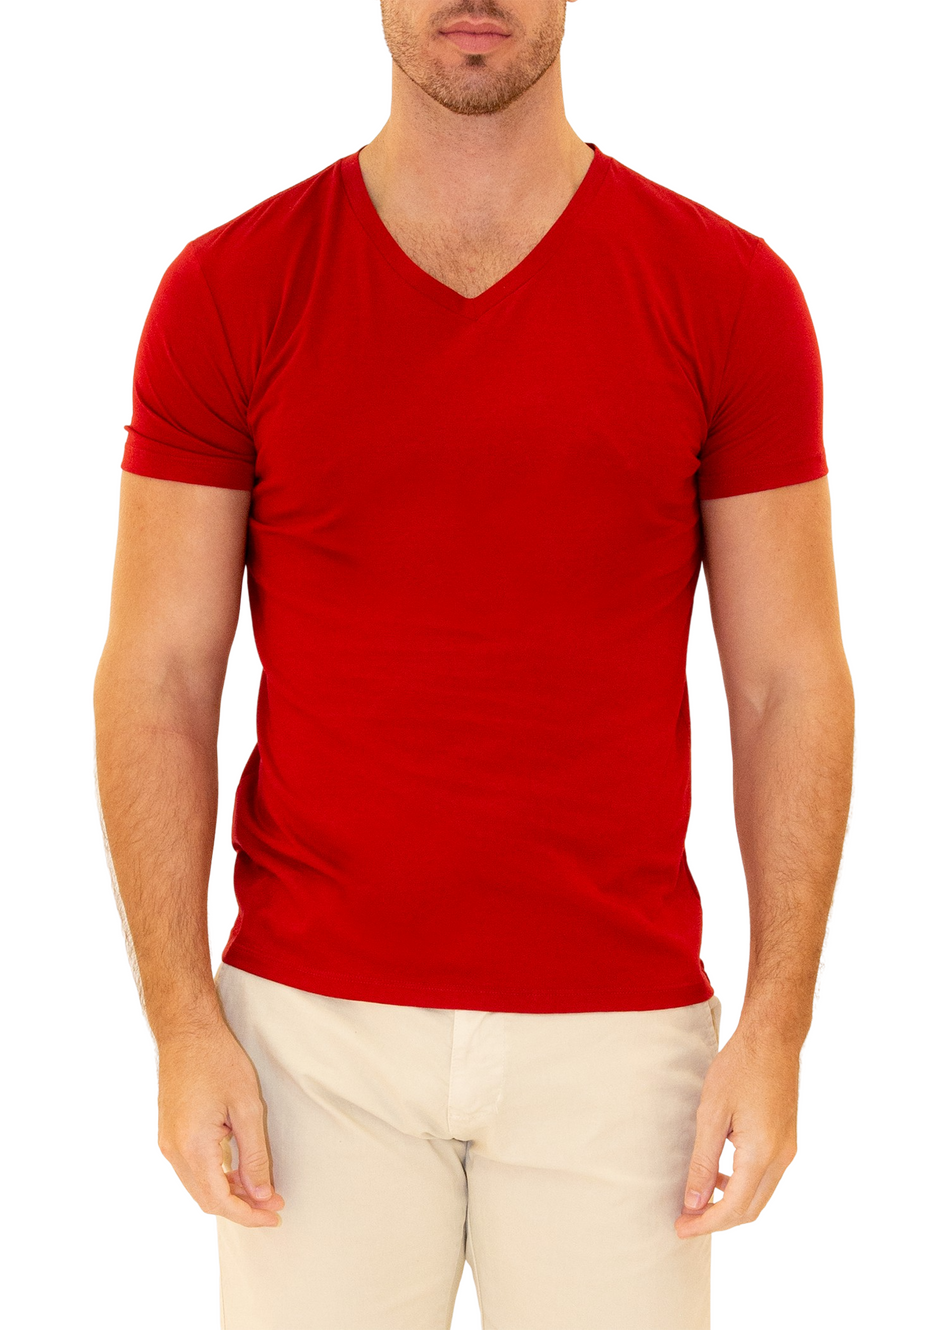 Men's Essentials Cotton V-Neck Solid Red